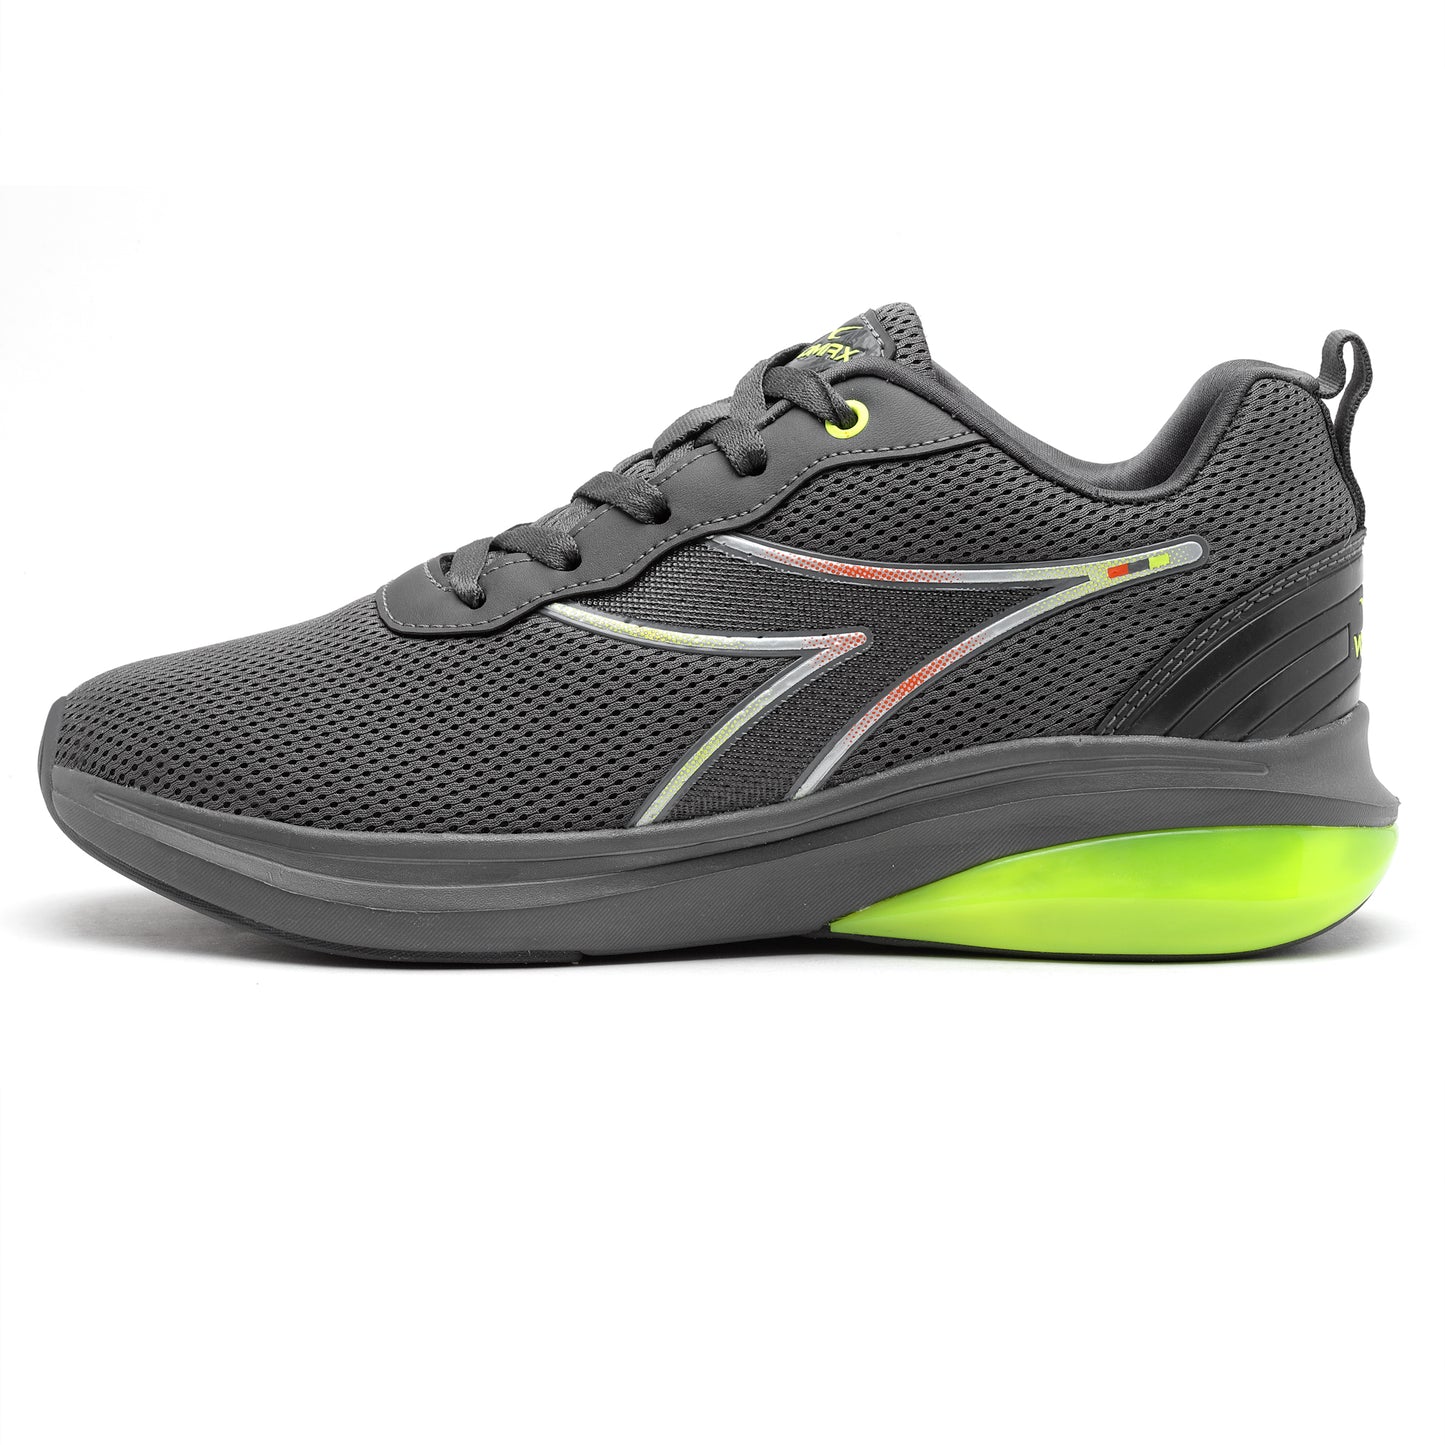 Vomax Sports Farley-02 Men's Swift Running & Training Shoes Breathable Upper Mesh